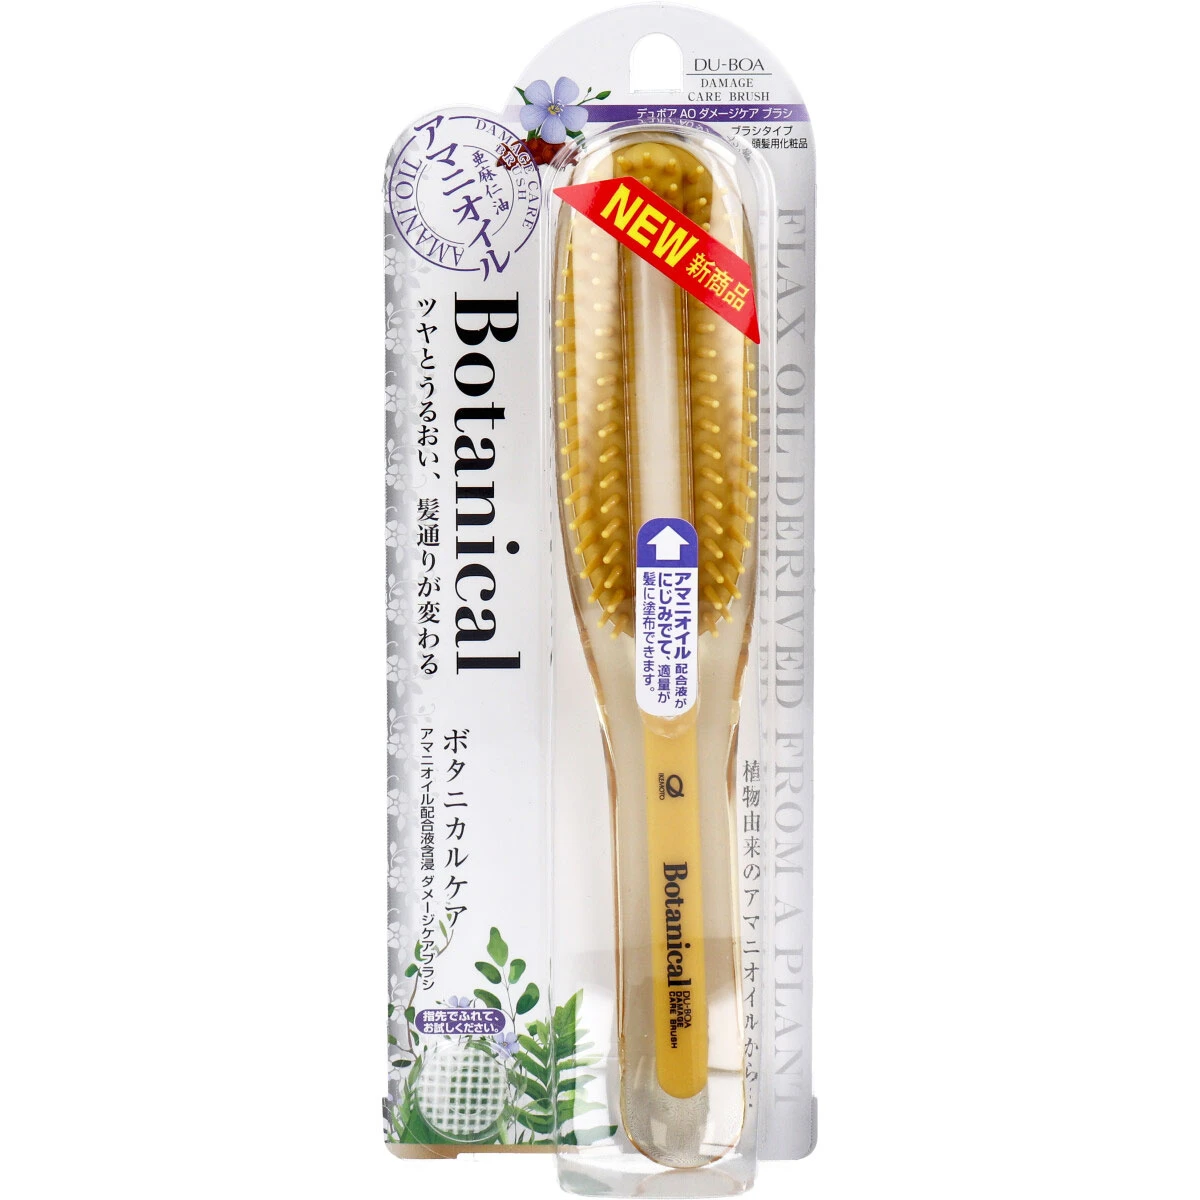 Botanical care Hair care brush Stick slide brush